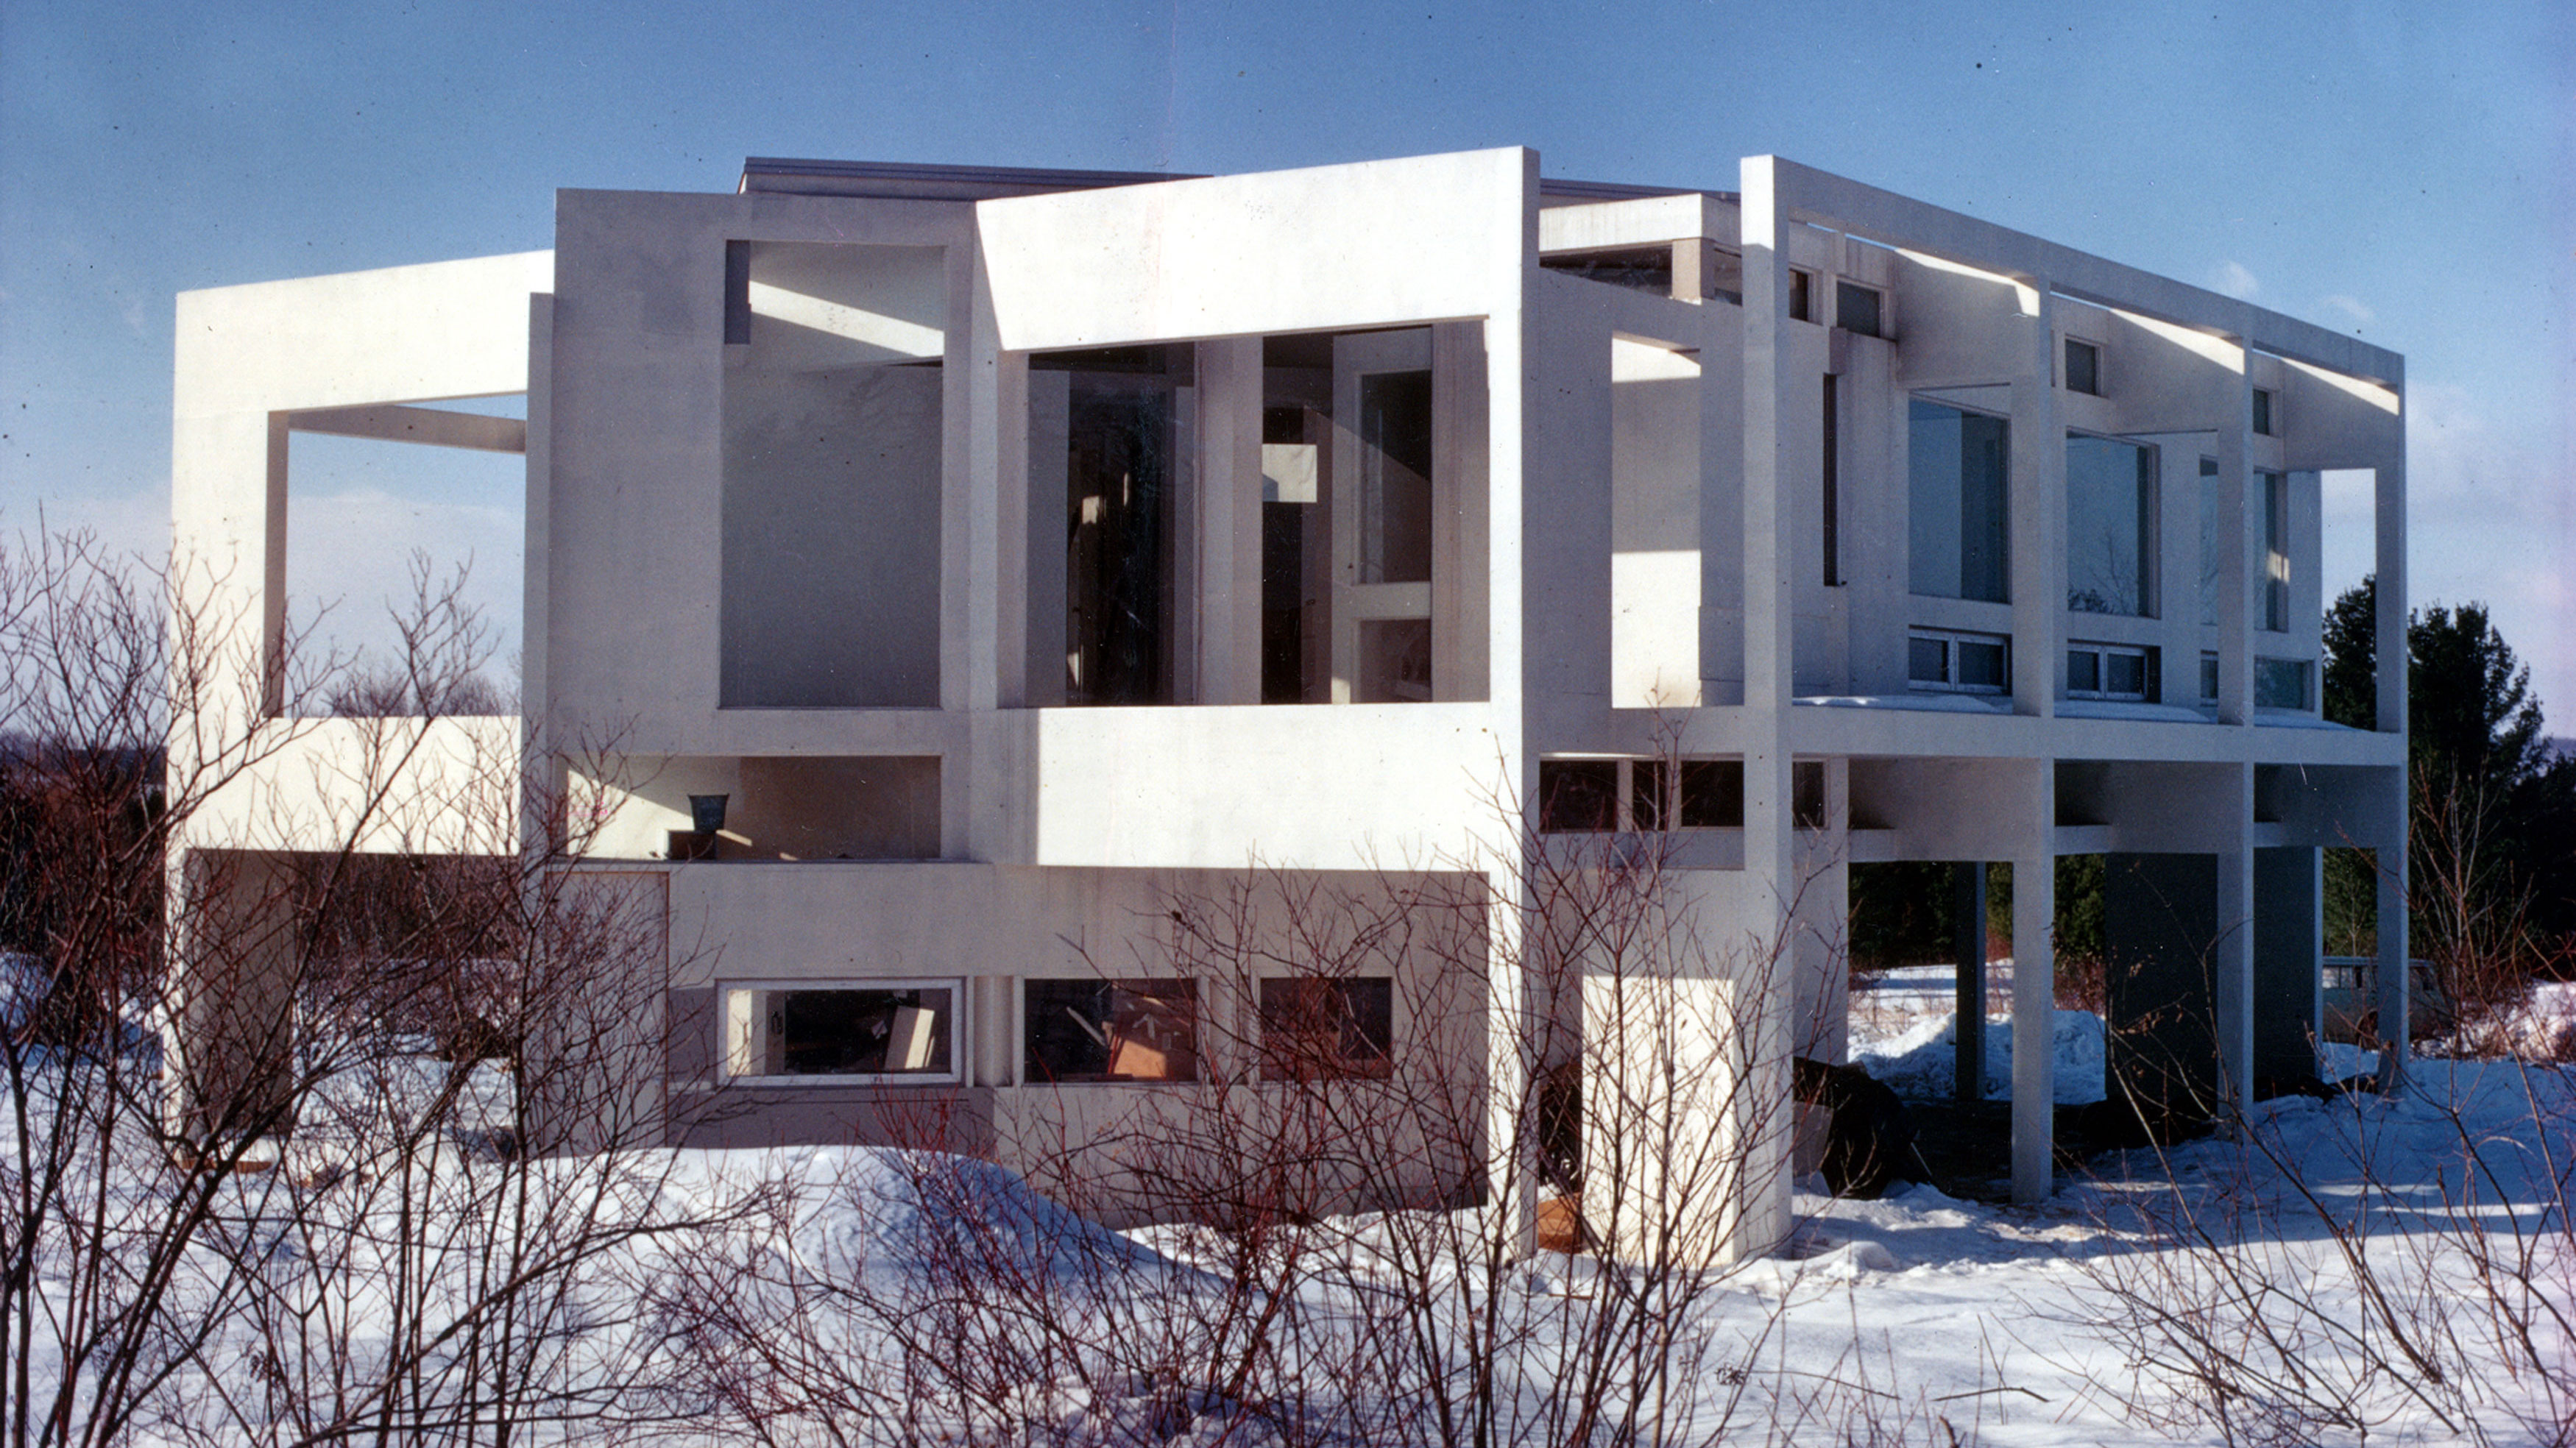 House Iii 1971 Eisenman Architects